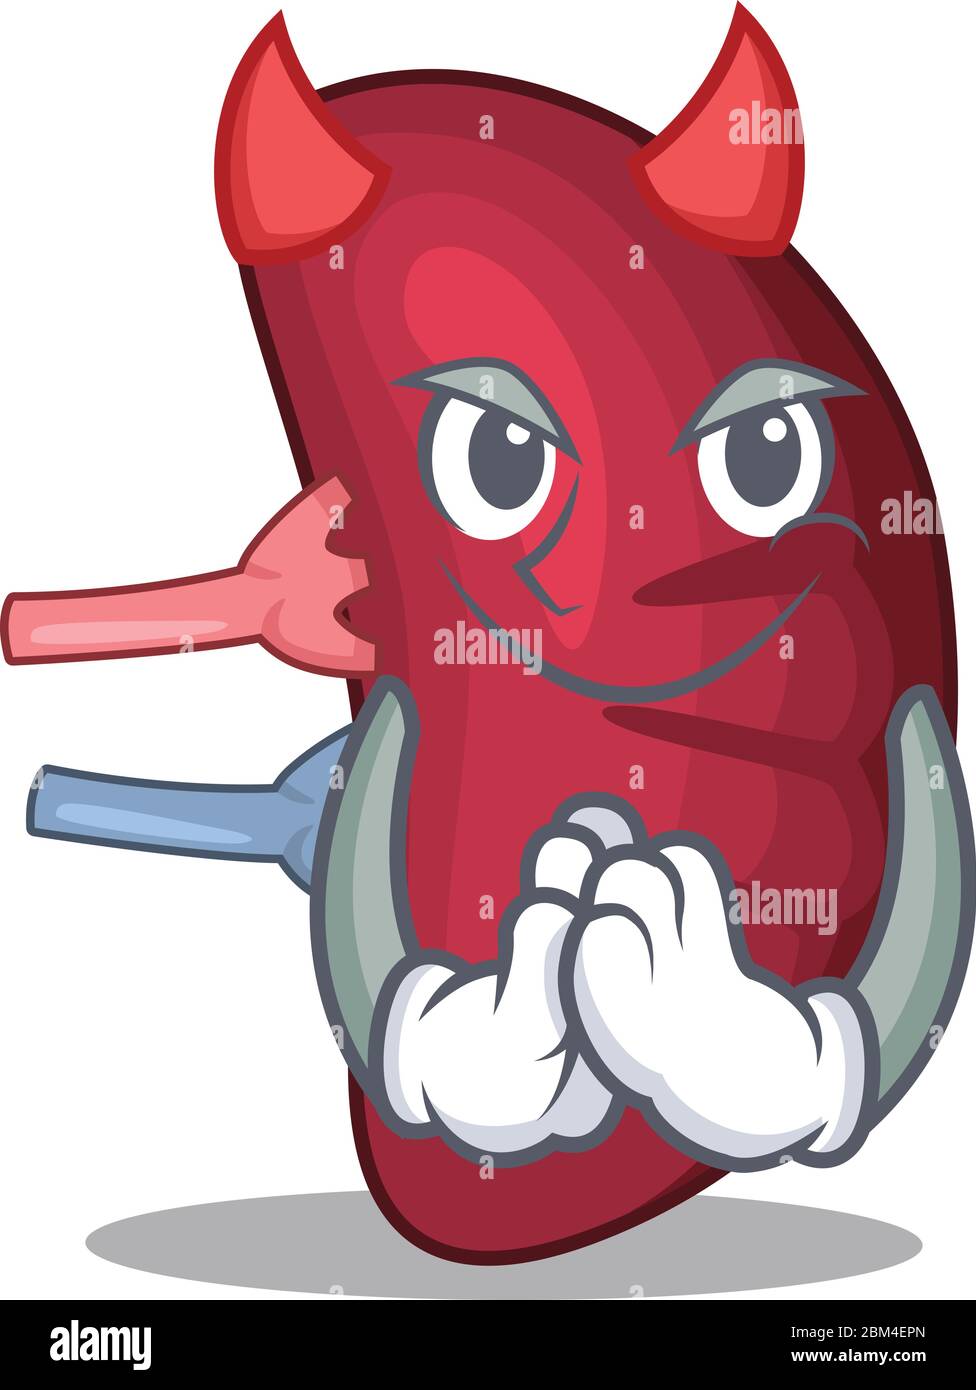 Human spleen dressed as devil cartoon character design style Stock Vector